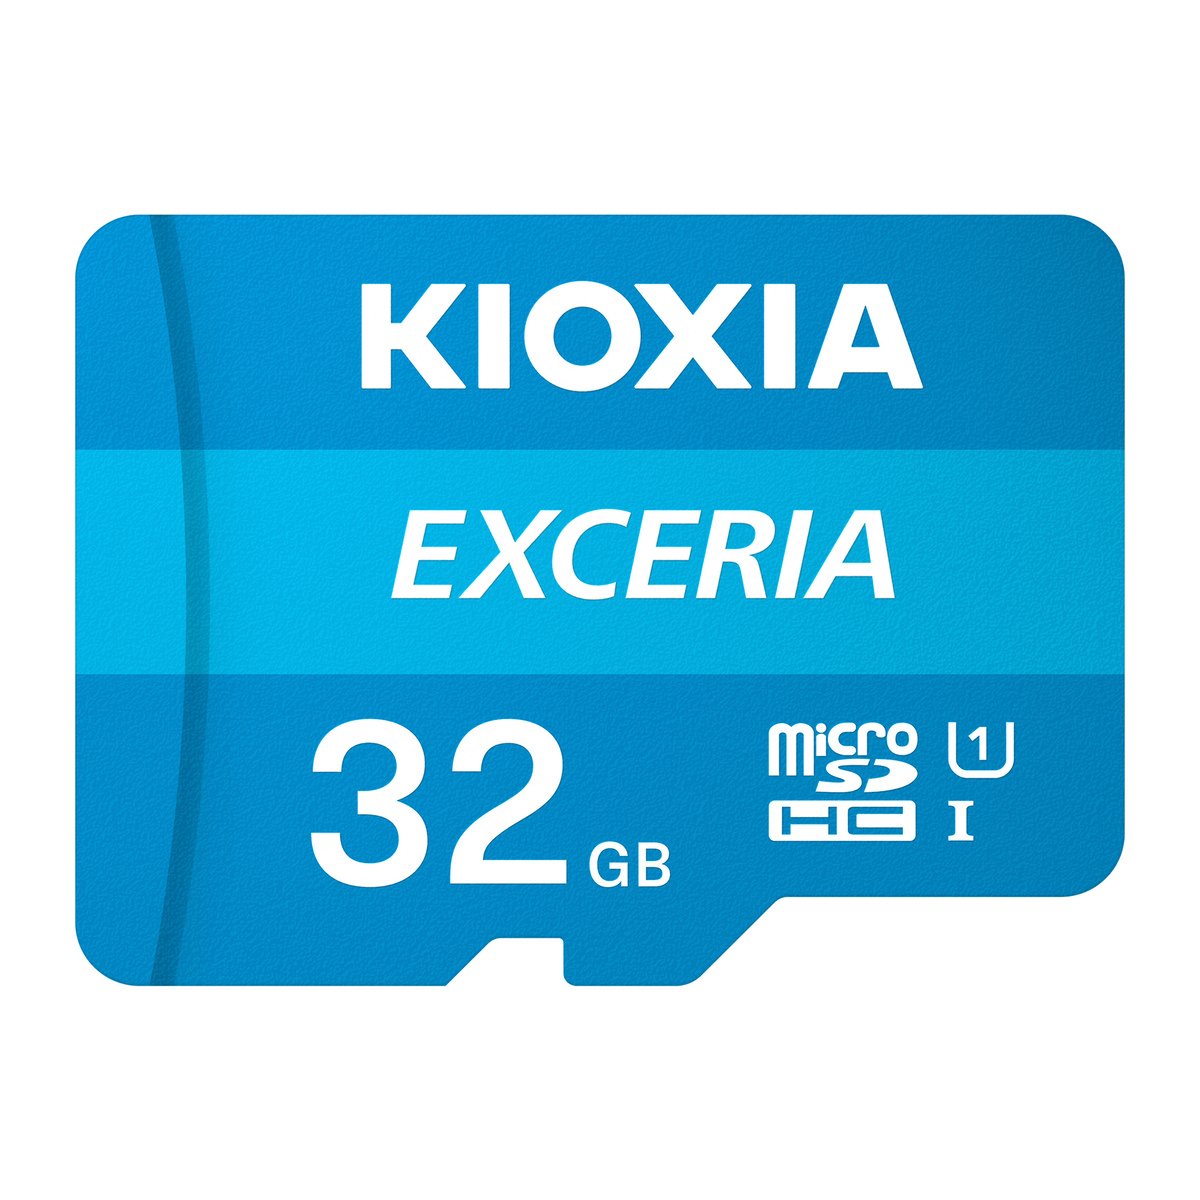 KIOXIA microSD EXCERIA LMEX1L032GG2 32GB